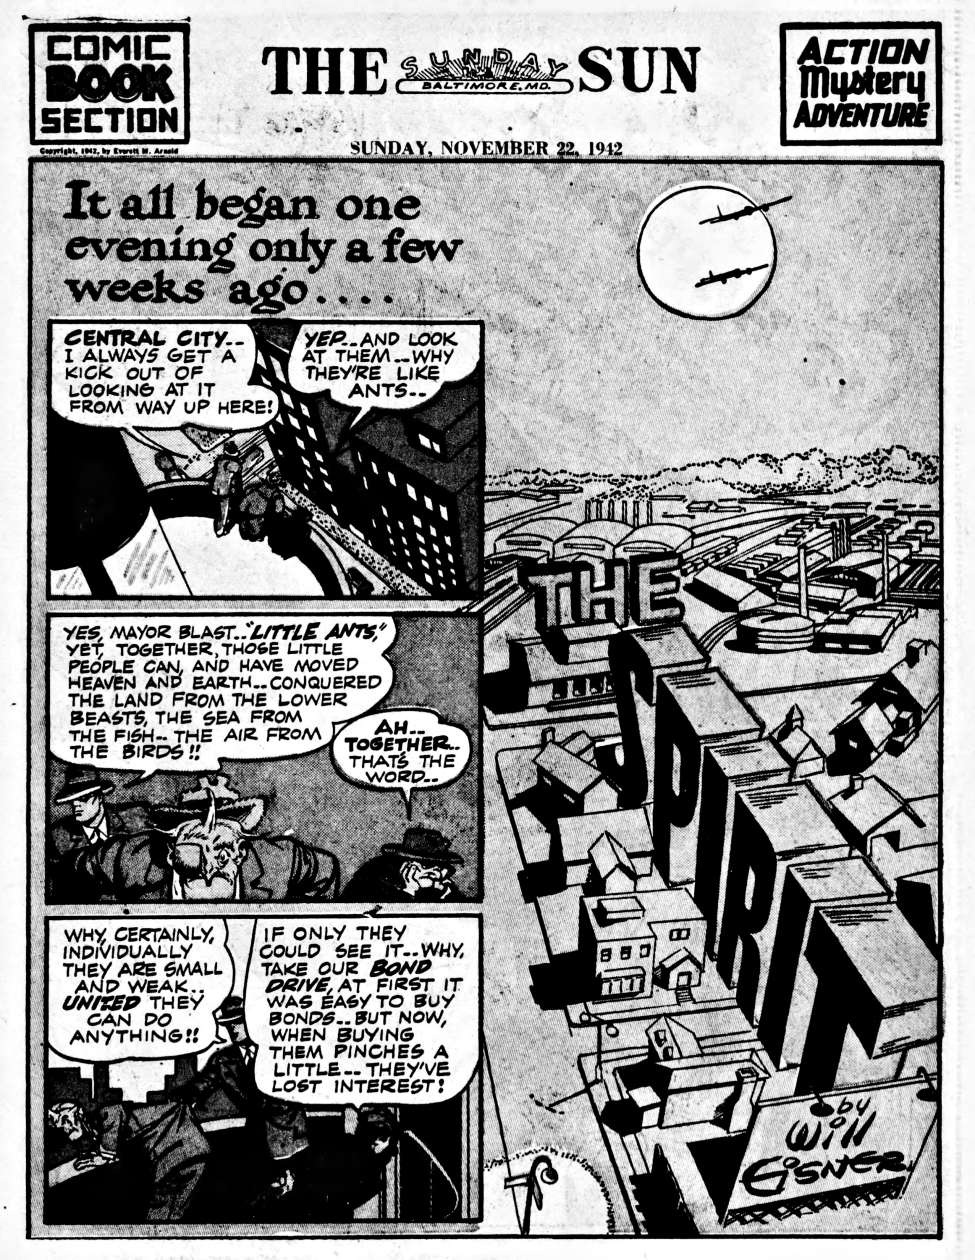 Comic Book Cover For The Spirit (1942-11-22) - Baltimore Sun (b/w)